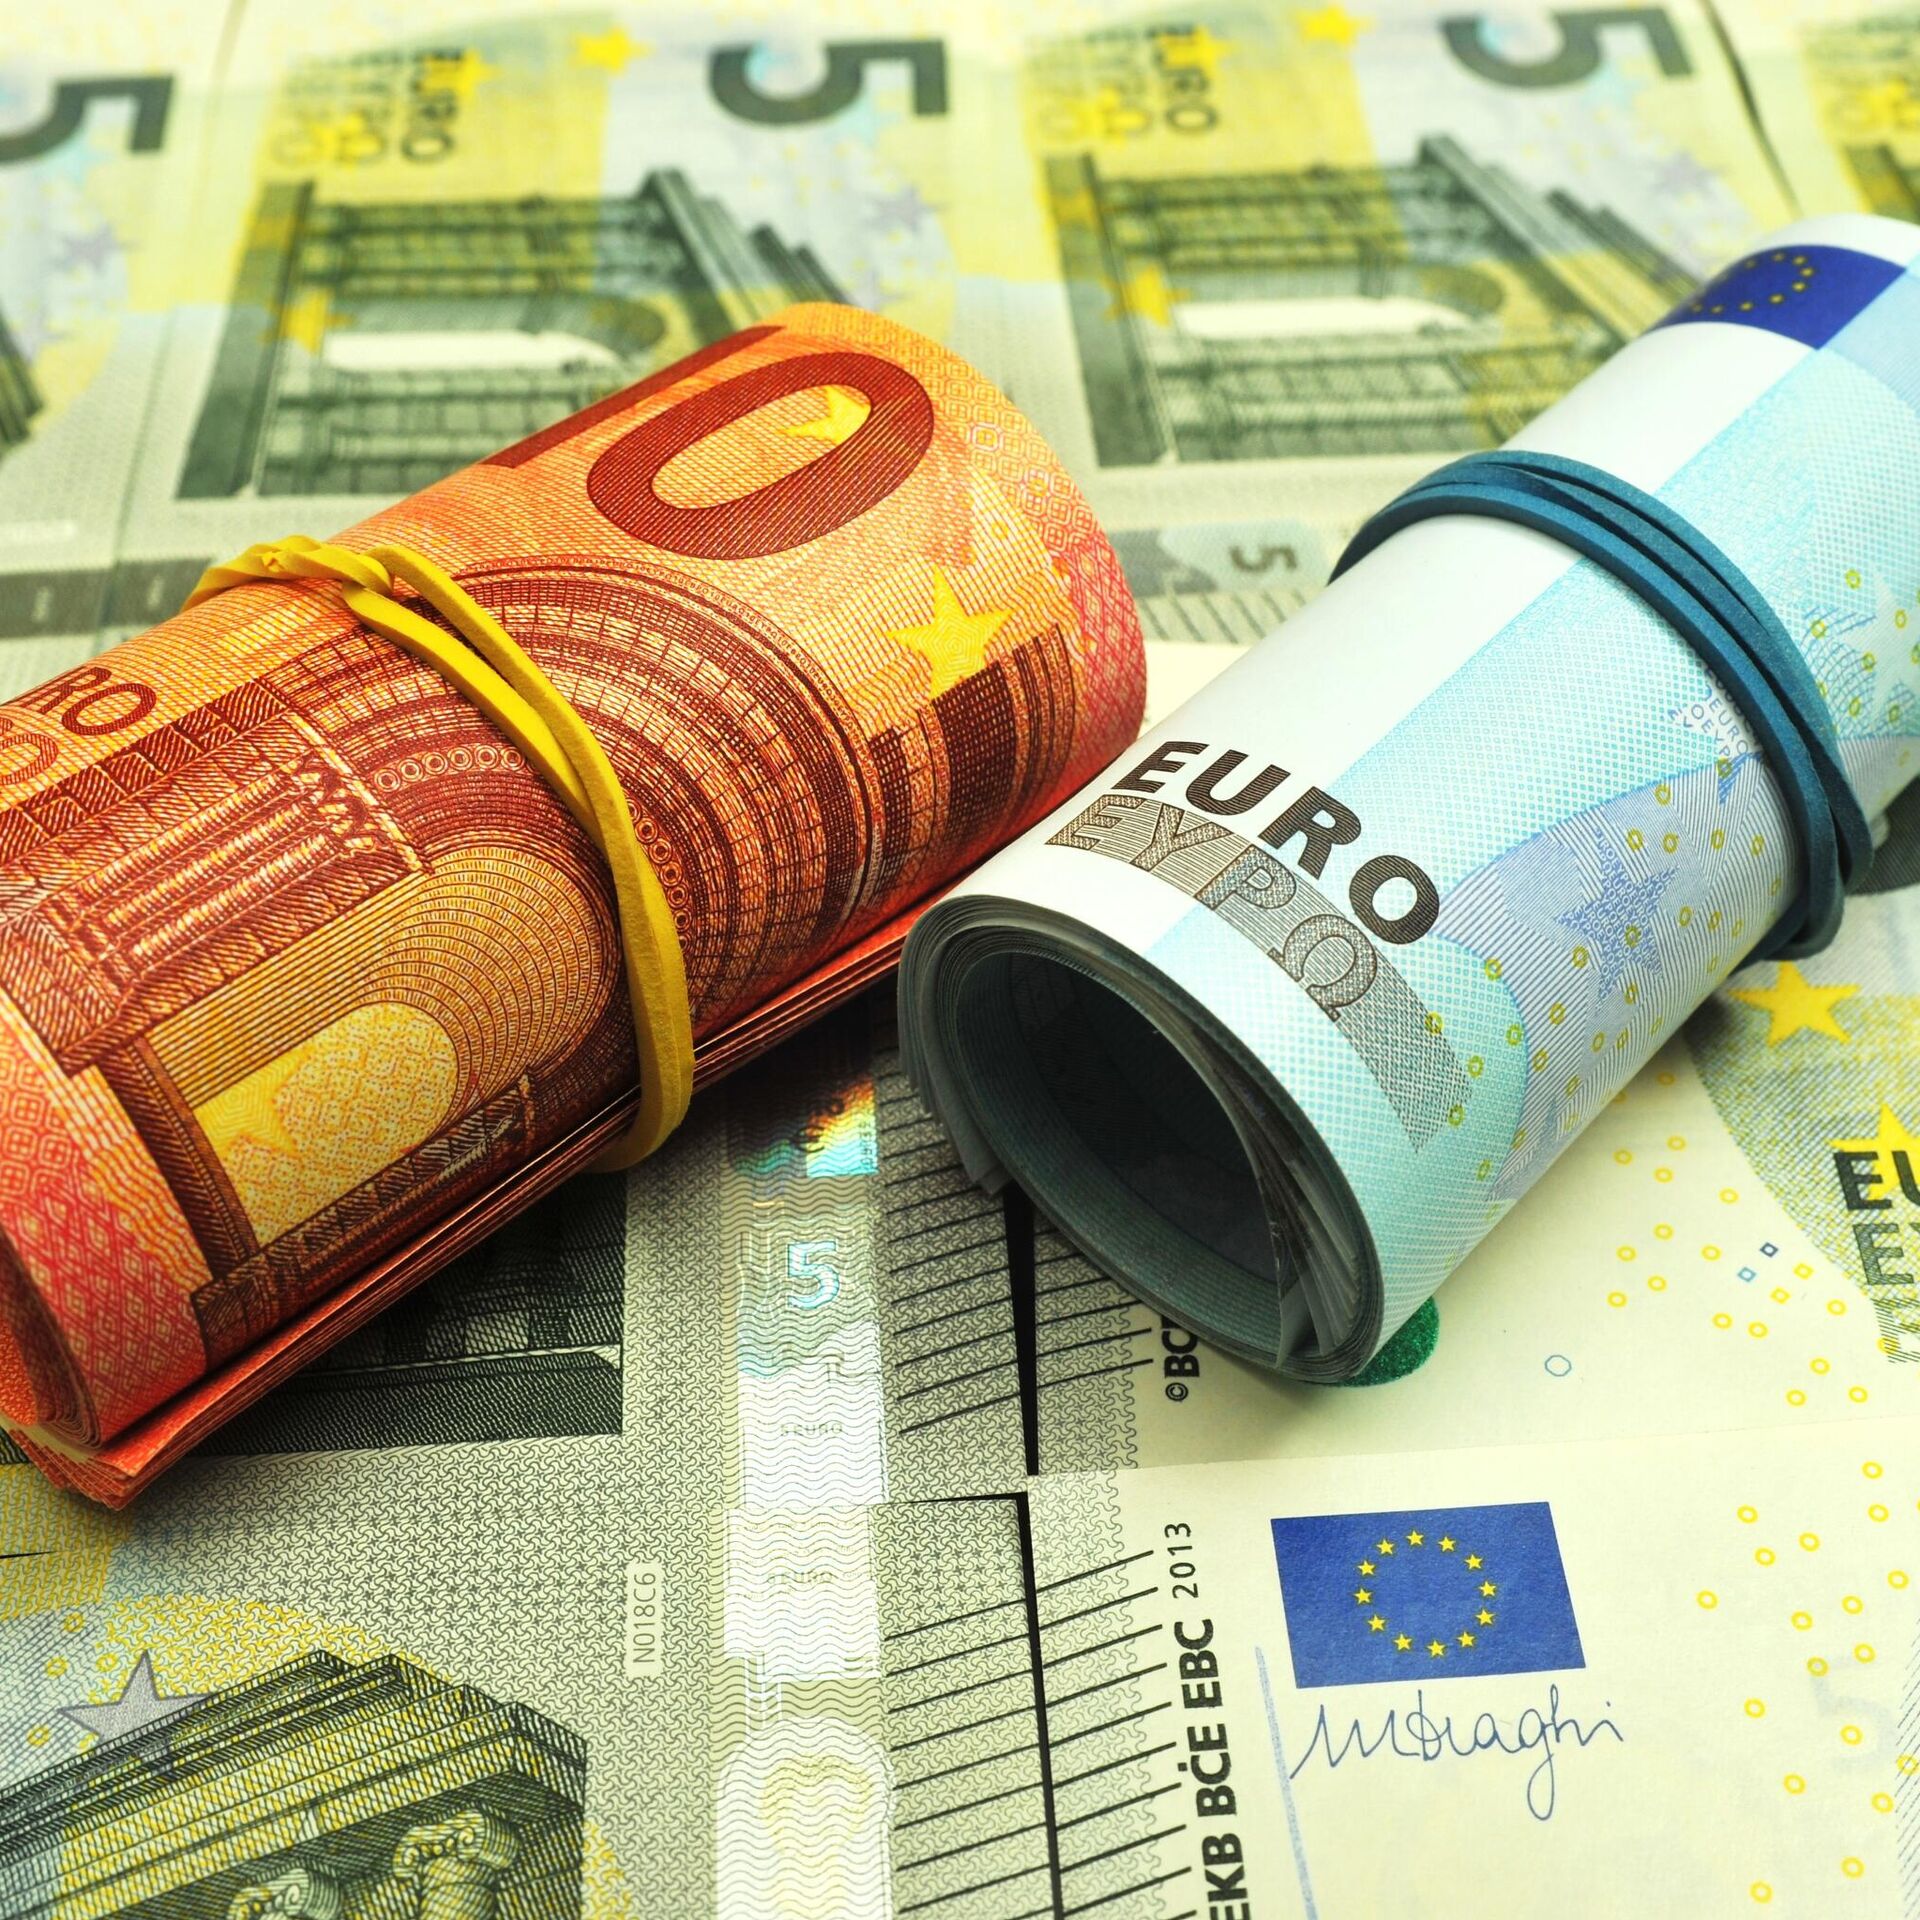 Евро сегодня в сумах. Евро в банках Курска. Чирпон цена на евро.